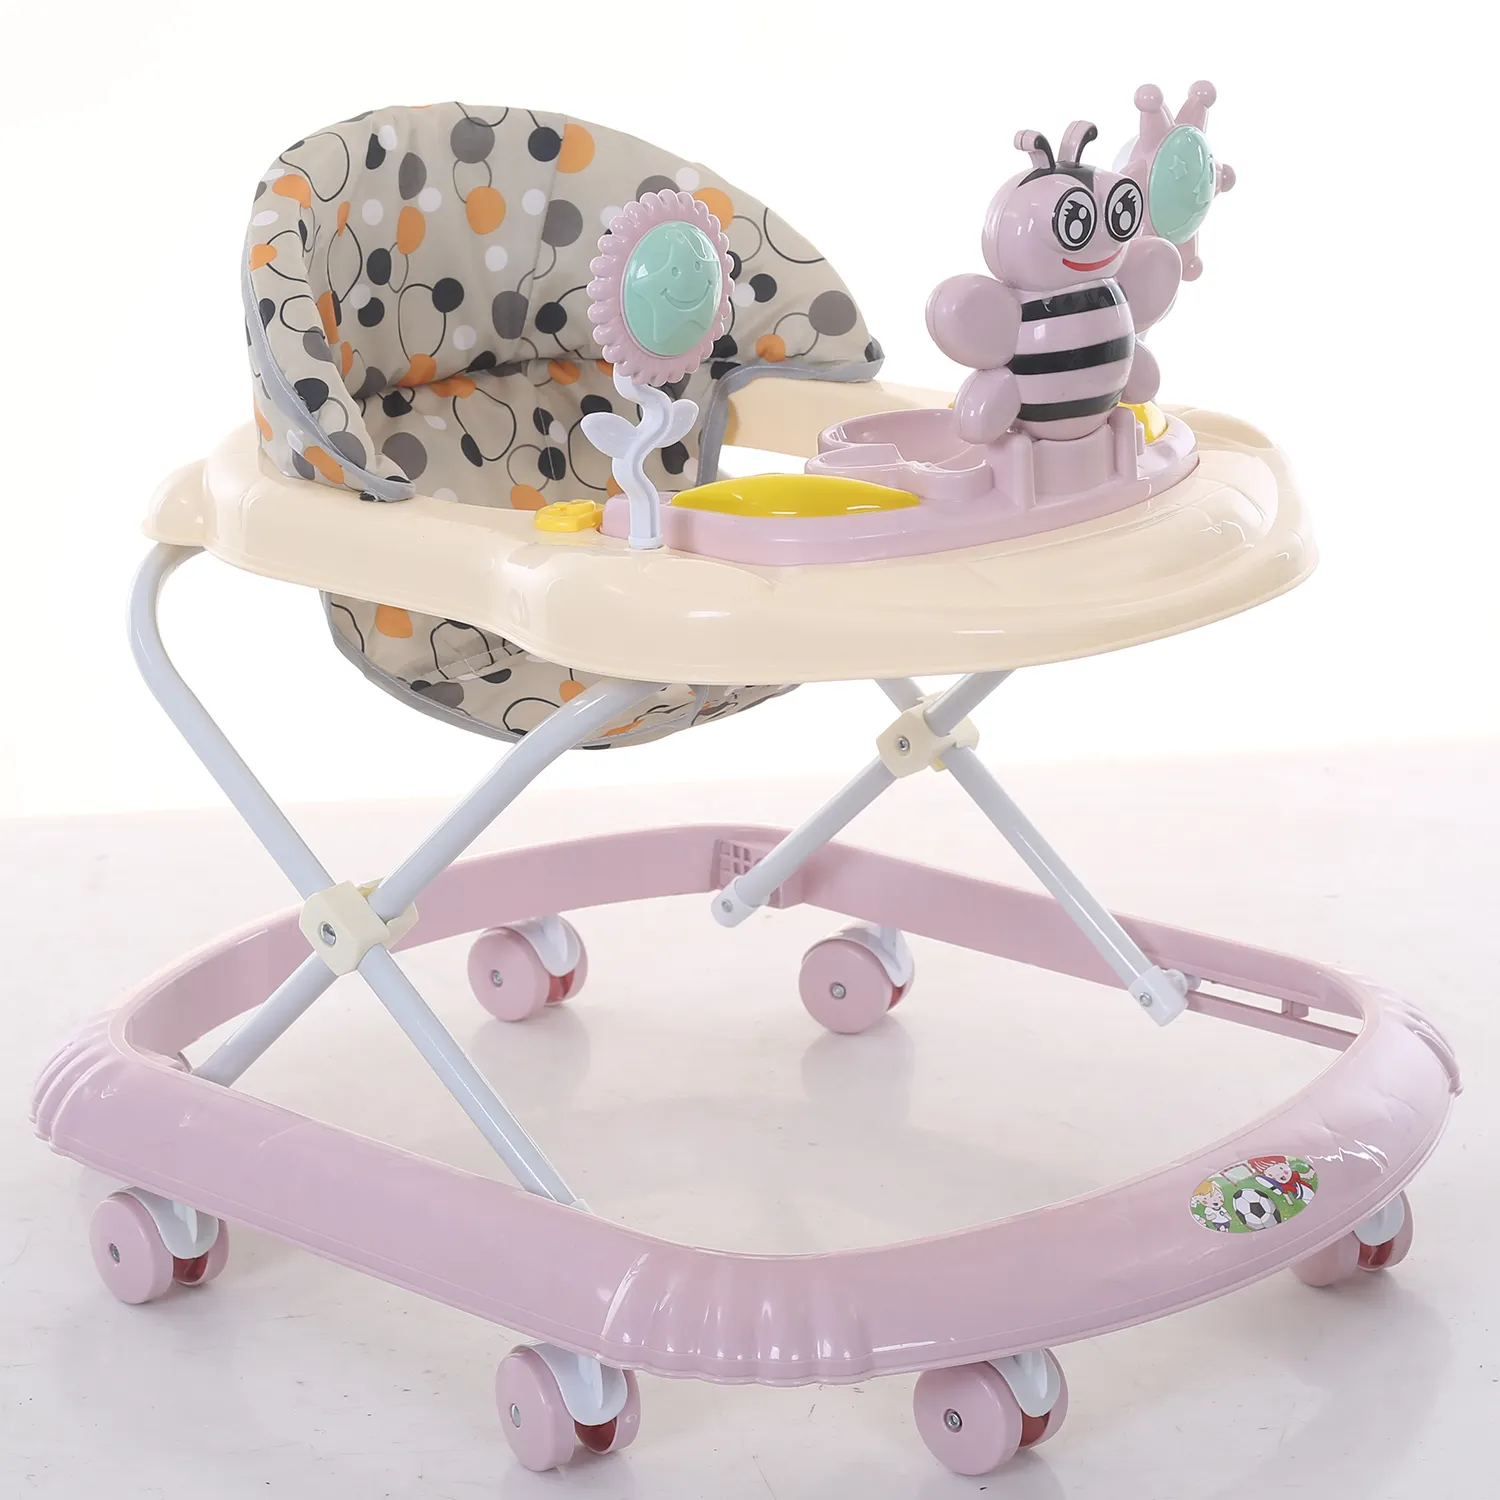 Carrier de juguetes para niños con licencia, andador sencillo, música para bebé con 7 ruedas de silicona, carrito andador para bebé alto